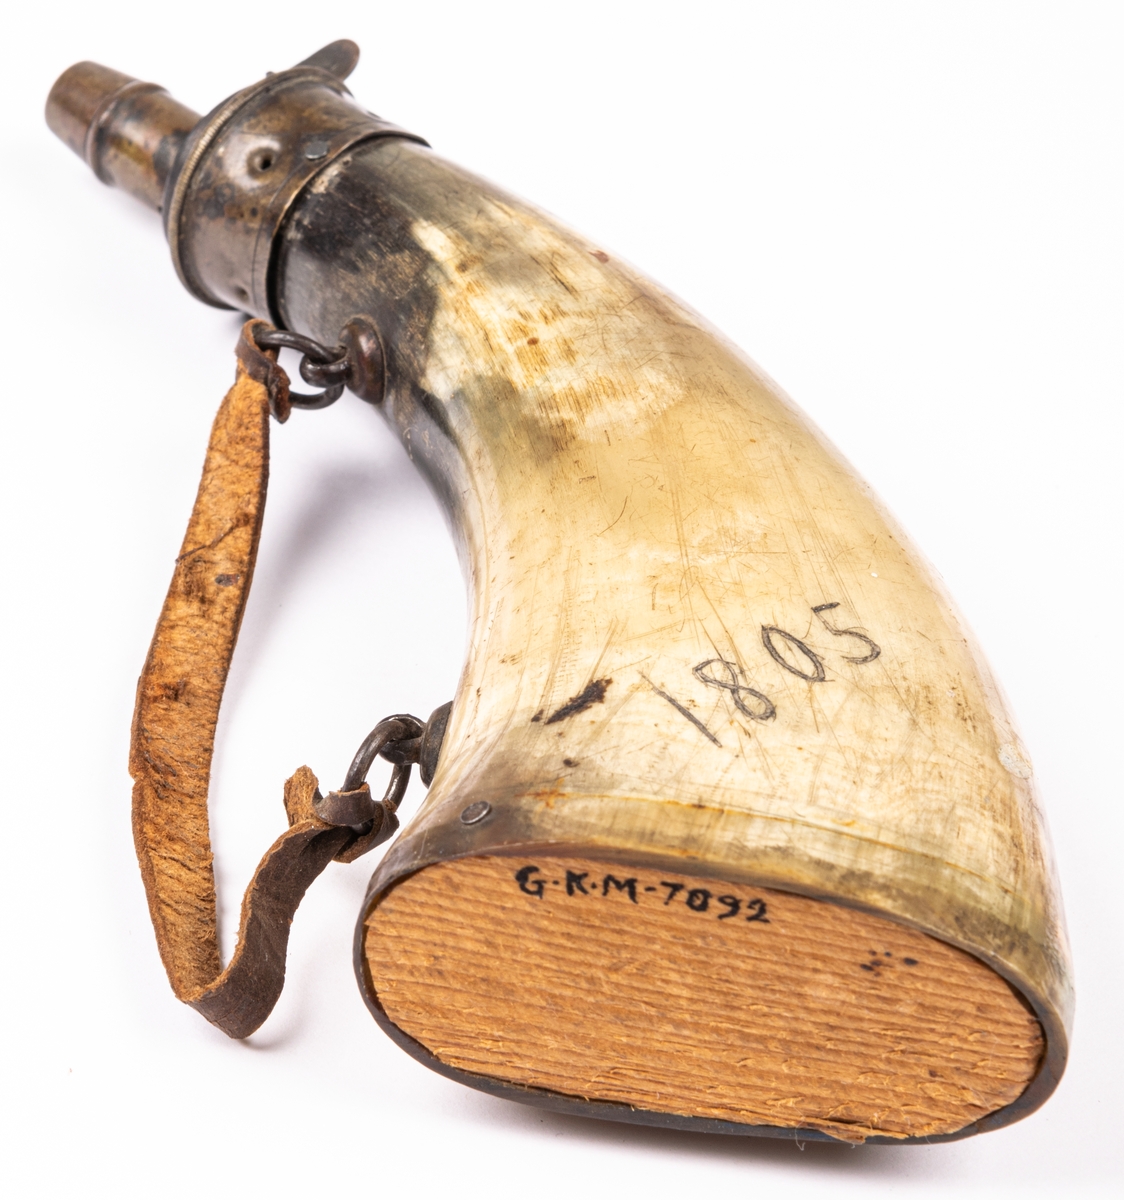 Kruthorn av horn. Botten av trä. Daterad 1805.